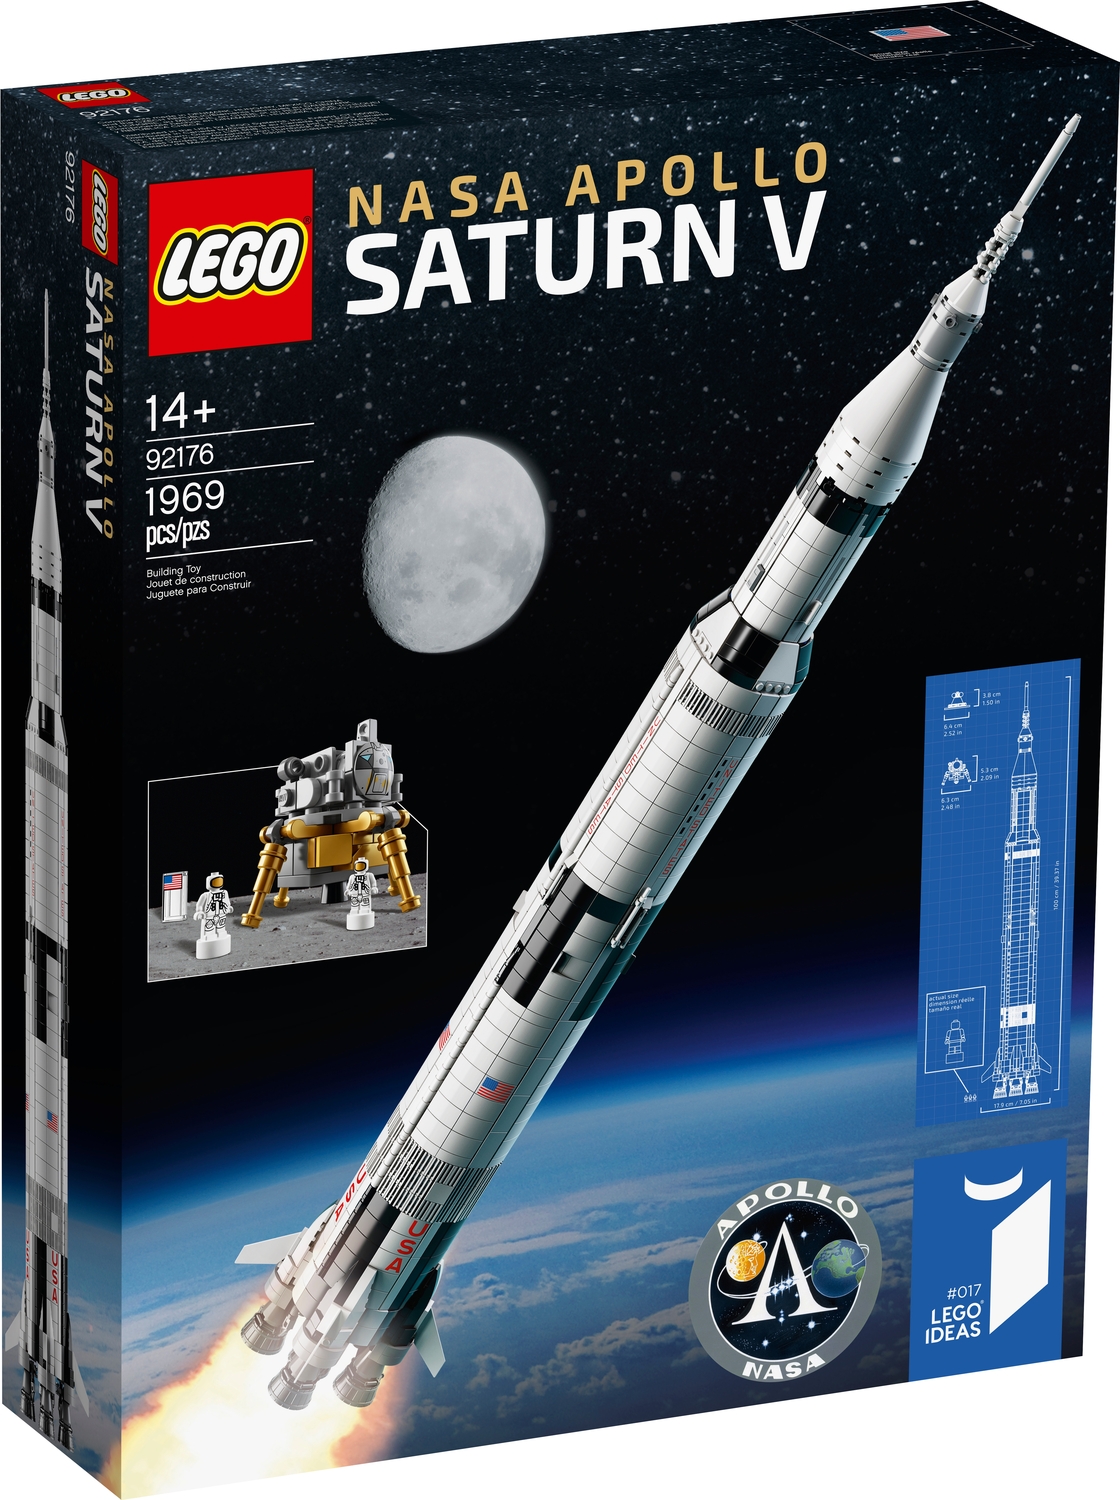 Lego Nasa Apollo Saturn V - Imagine Toys